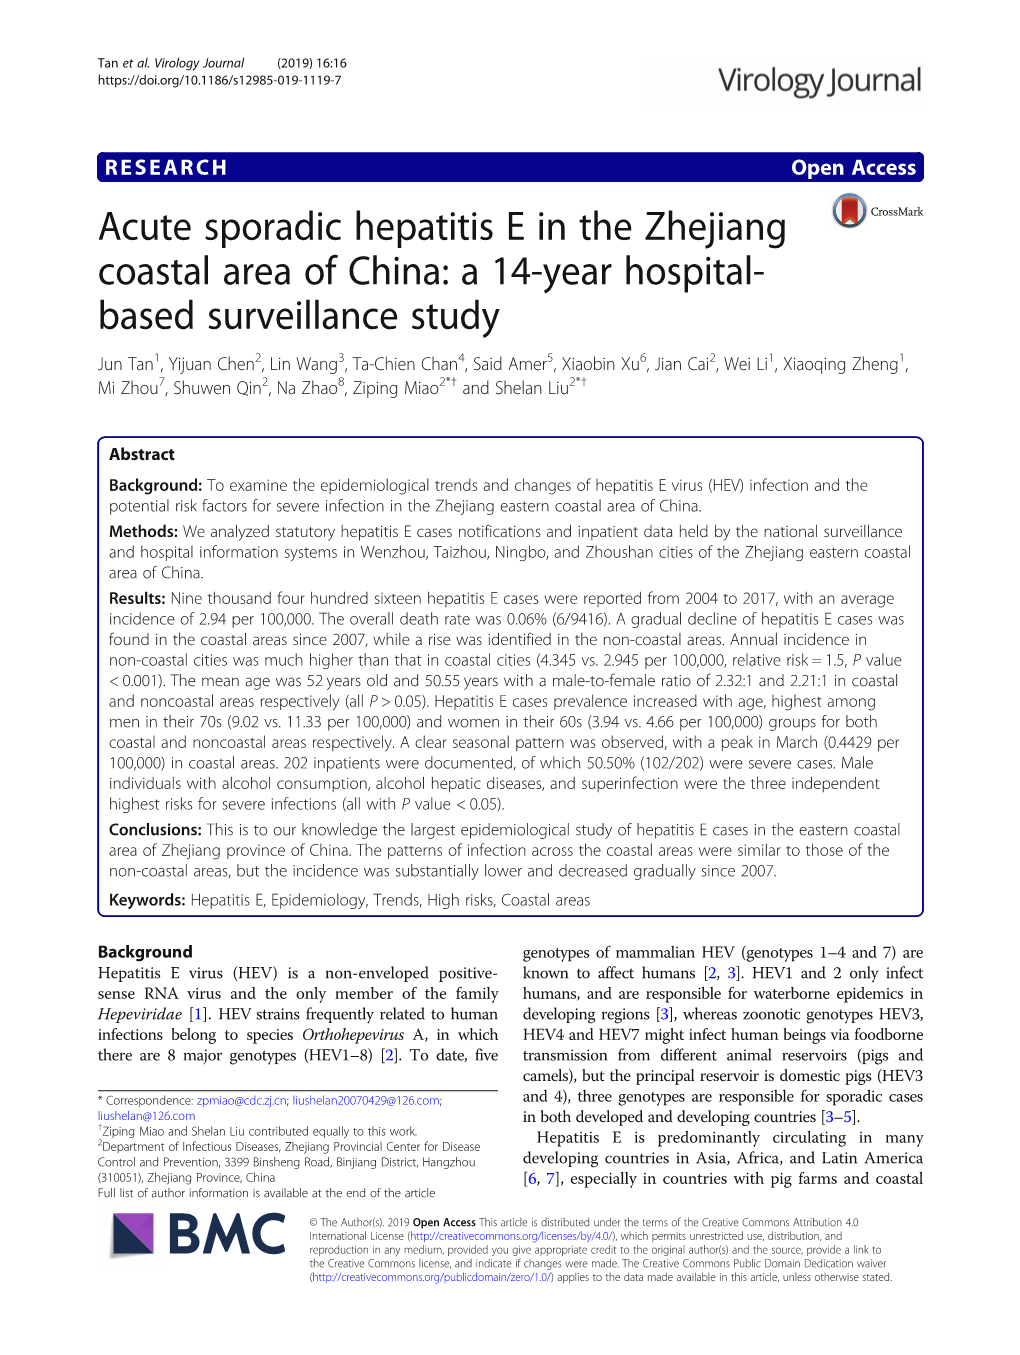 Acute Sporadic Hepatitis E in the Zhejiang Coastal Area of China